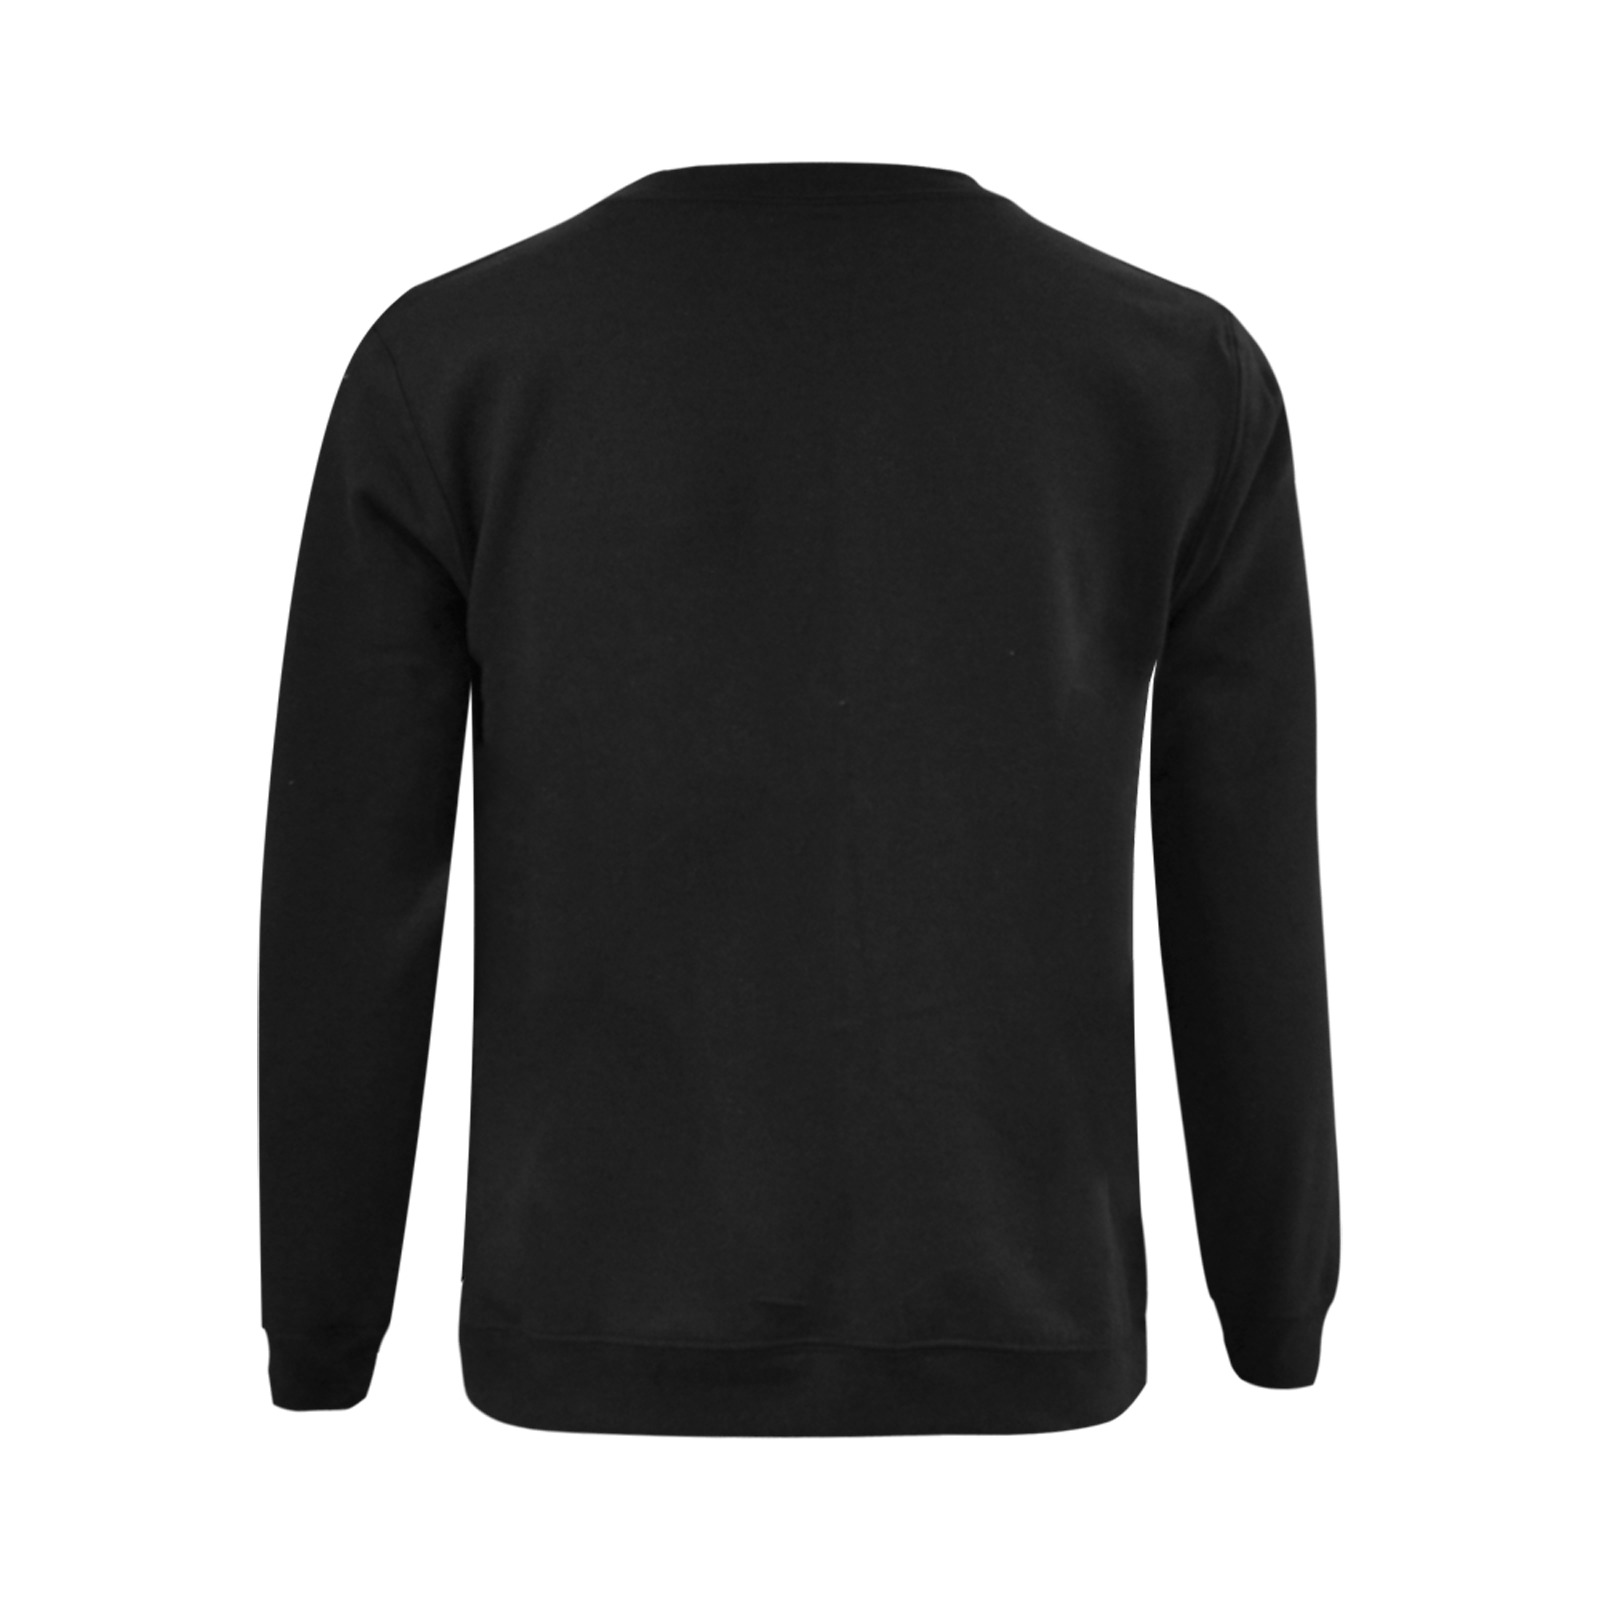 Basic Witch Gildan Crewneck Sweatshirt(NEW) (Model H01)